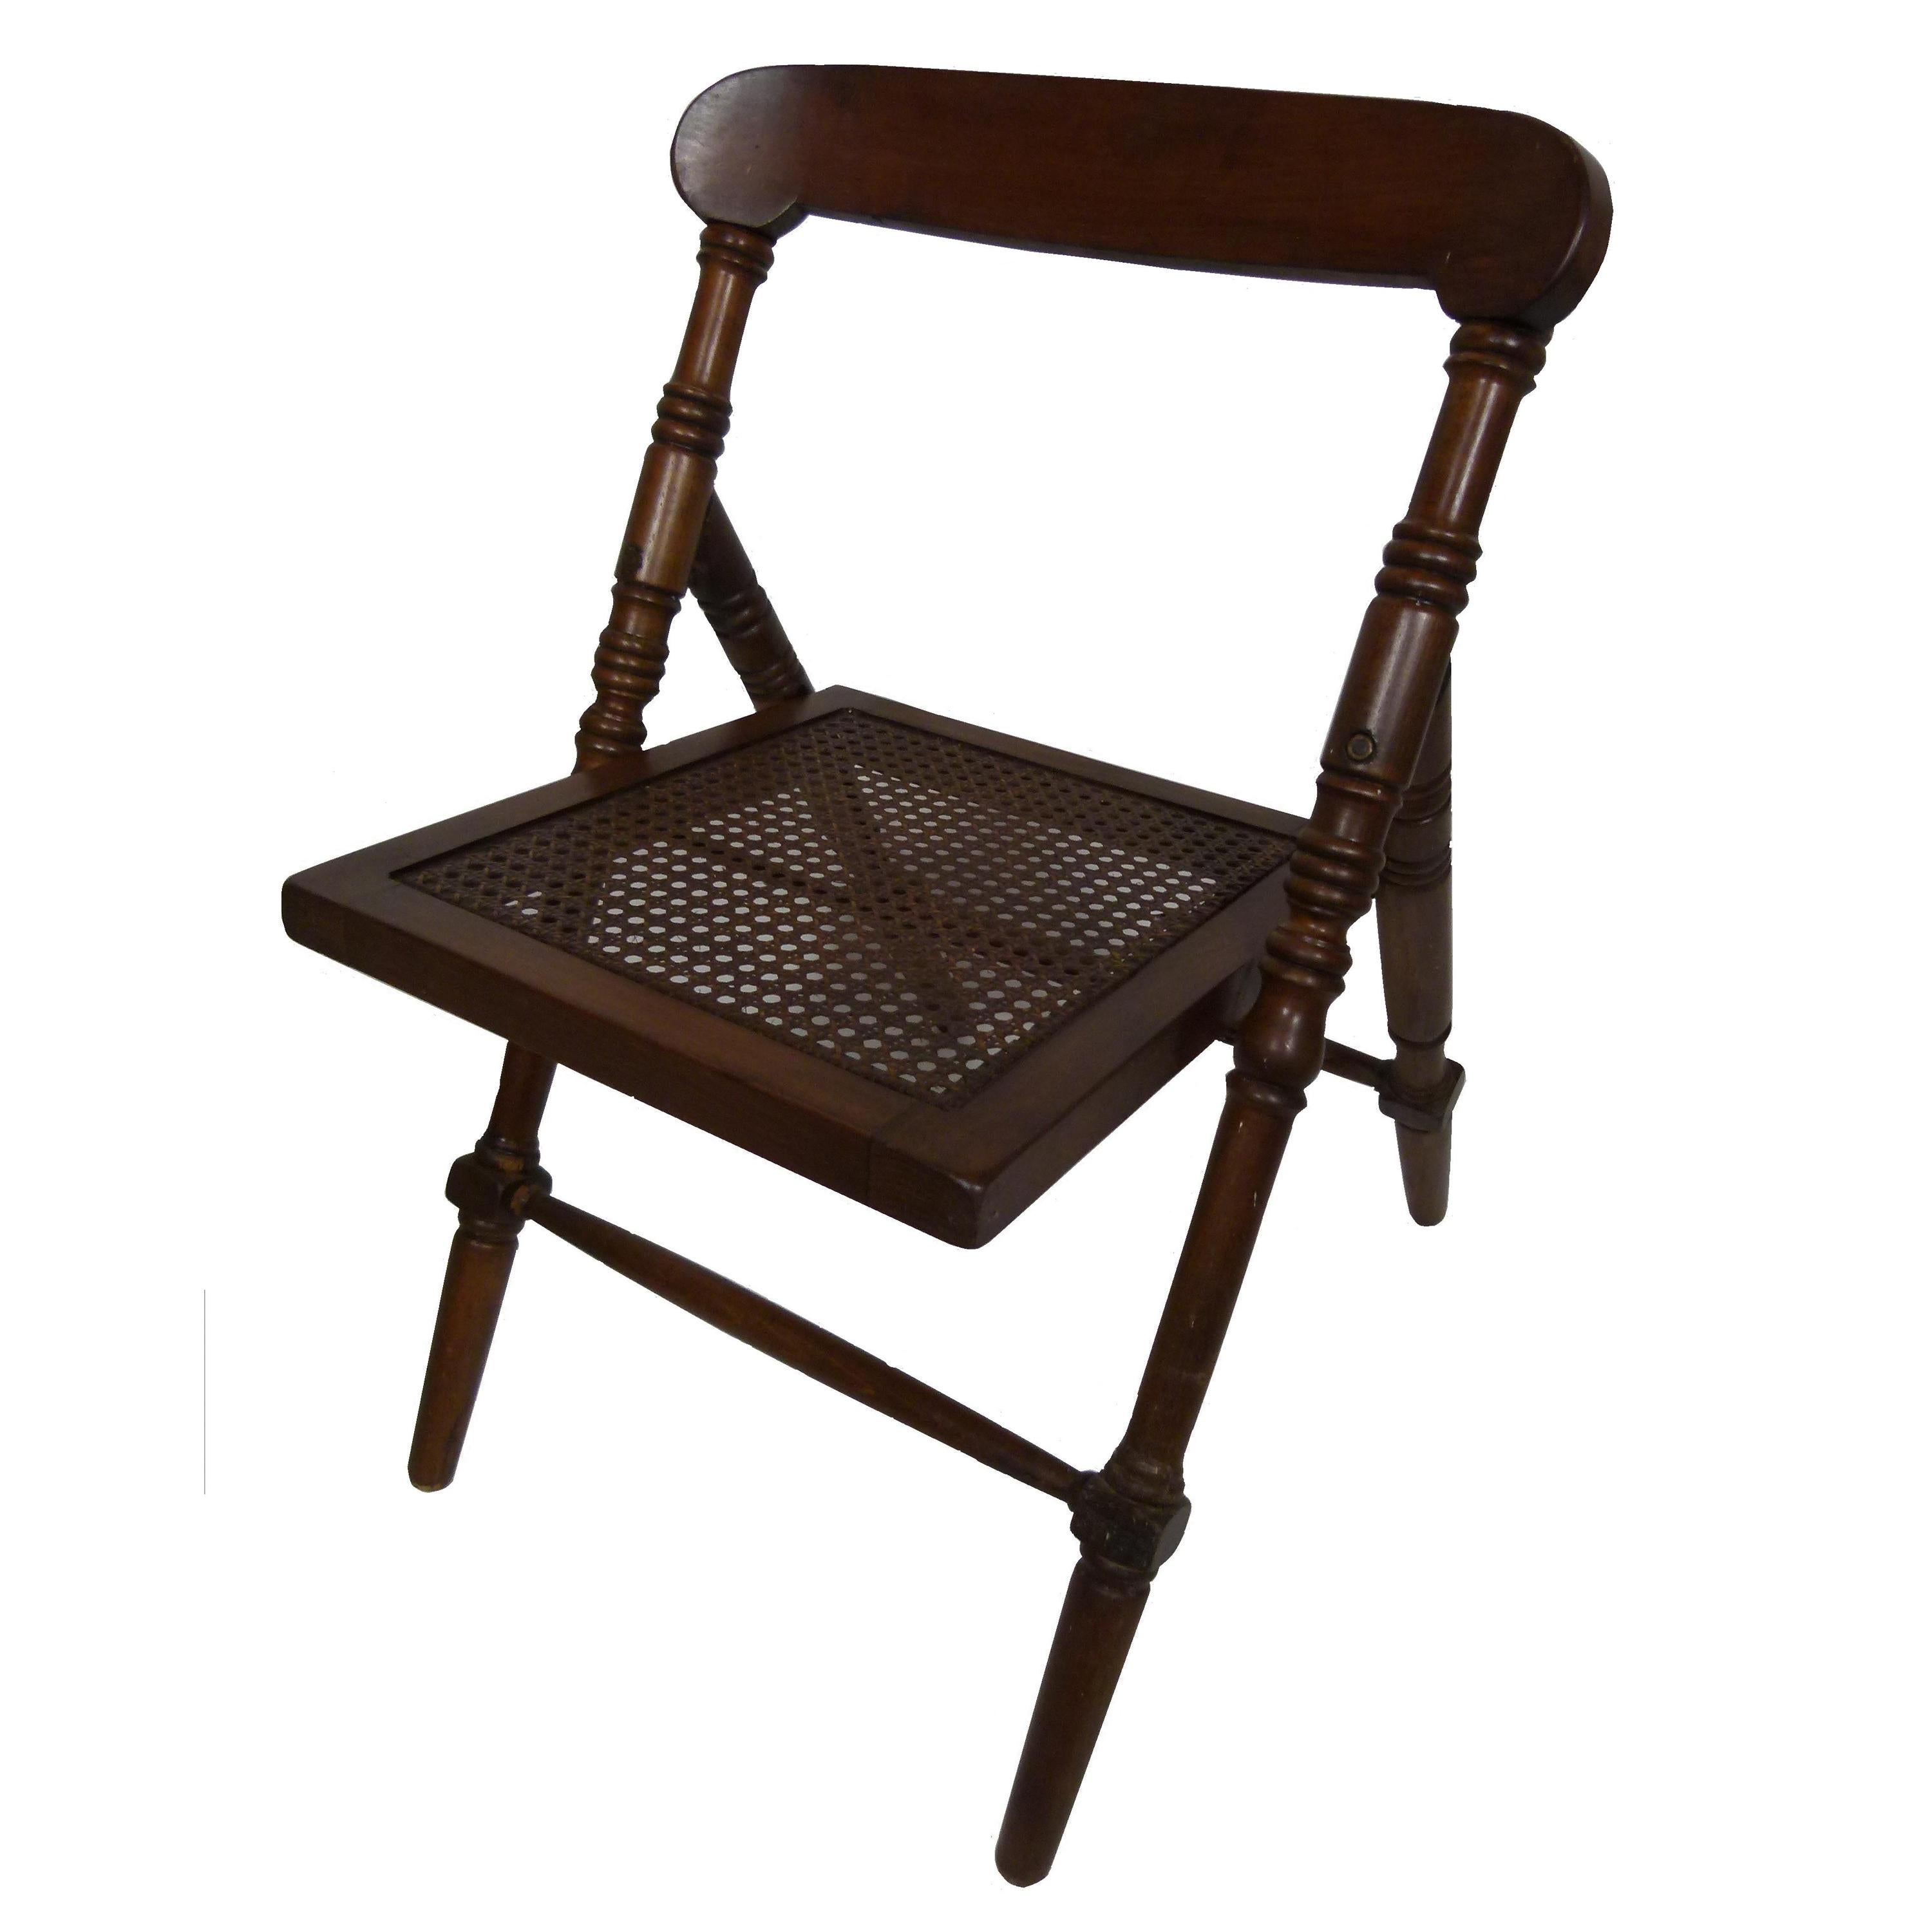 20th Century Gridded Seat Spanish Folding Chair